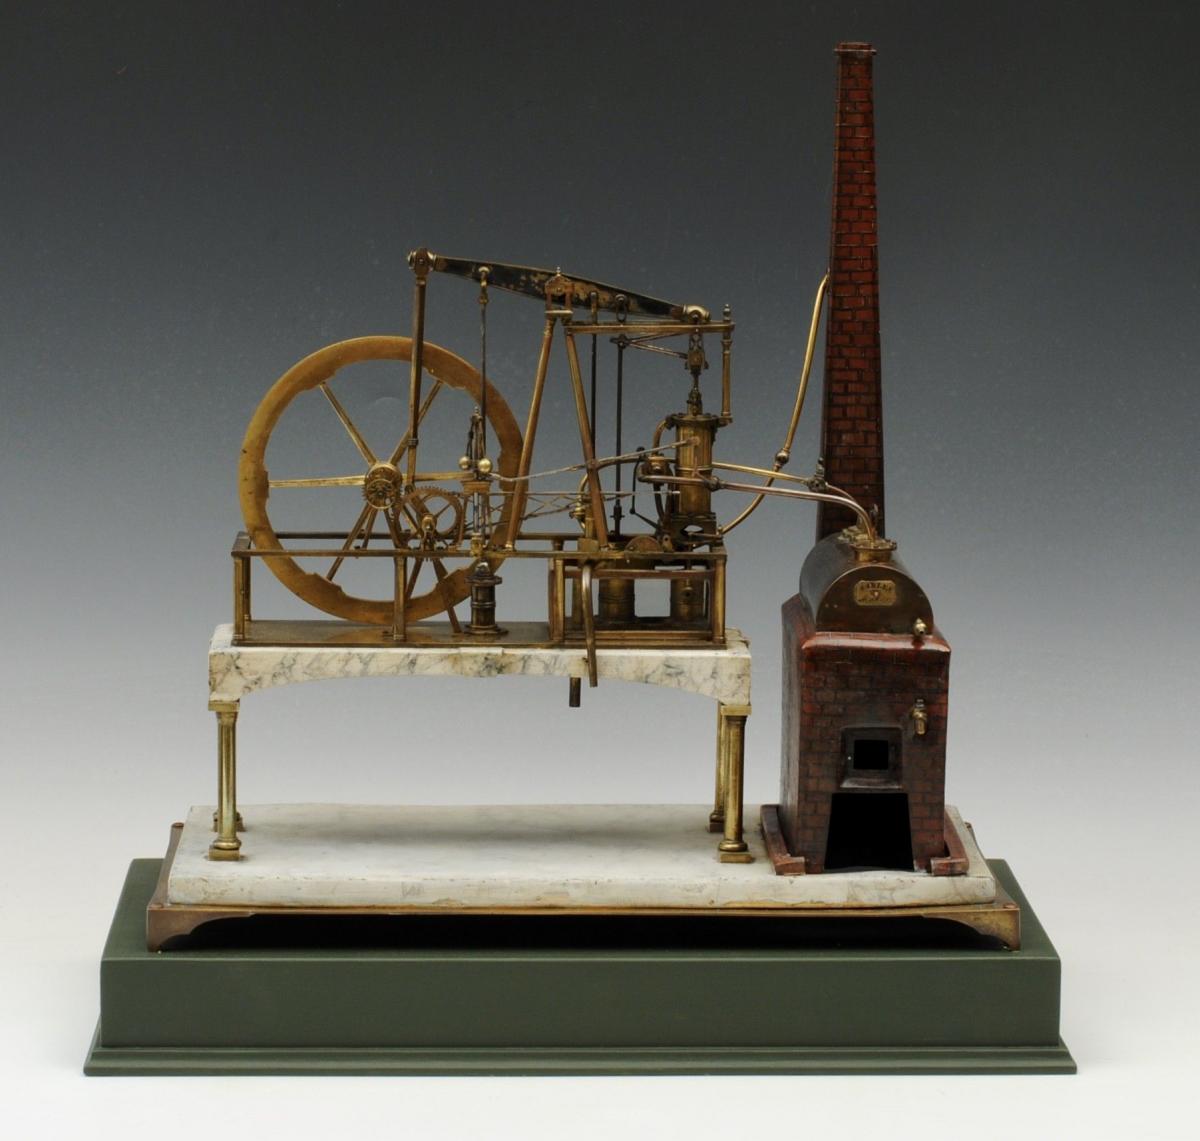 James watt was the of the modern steam engine фото 113